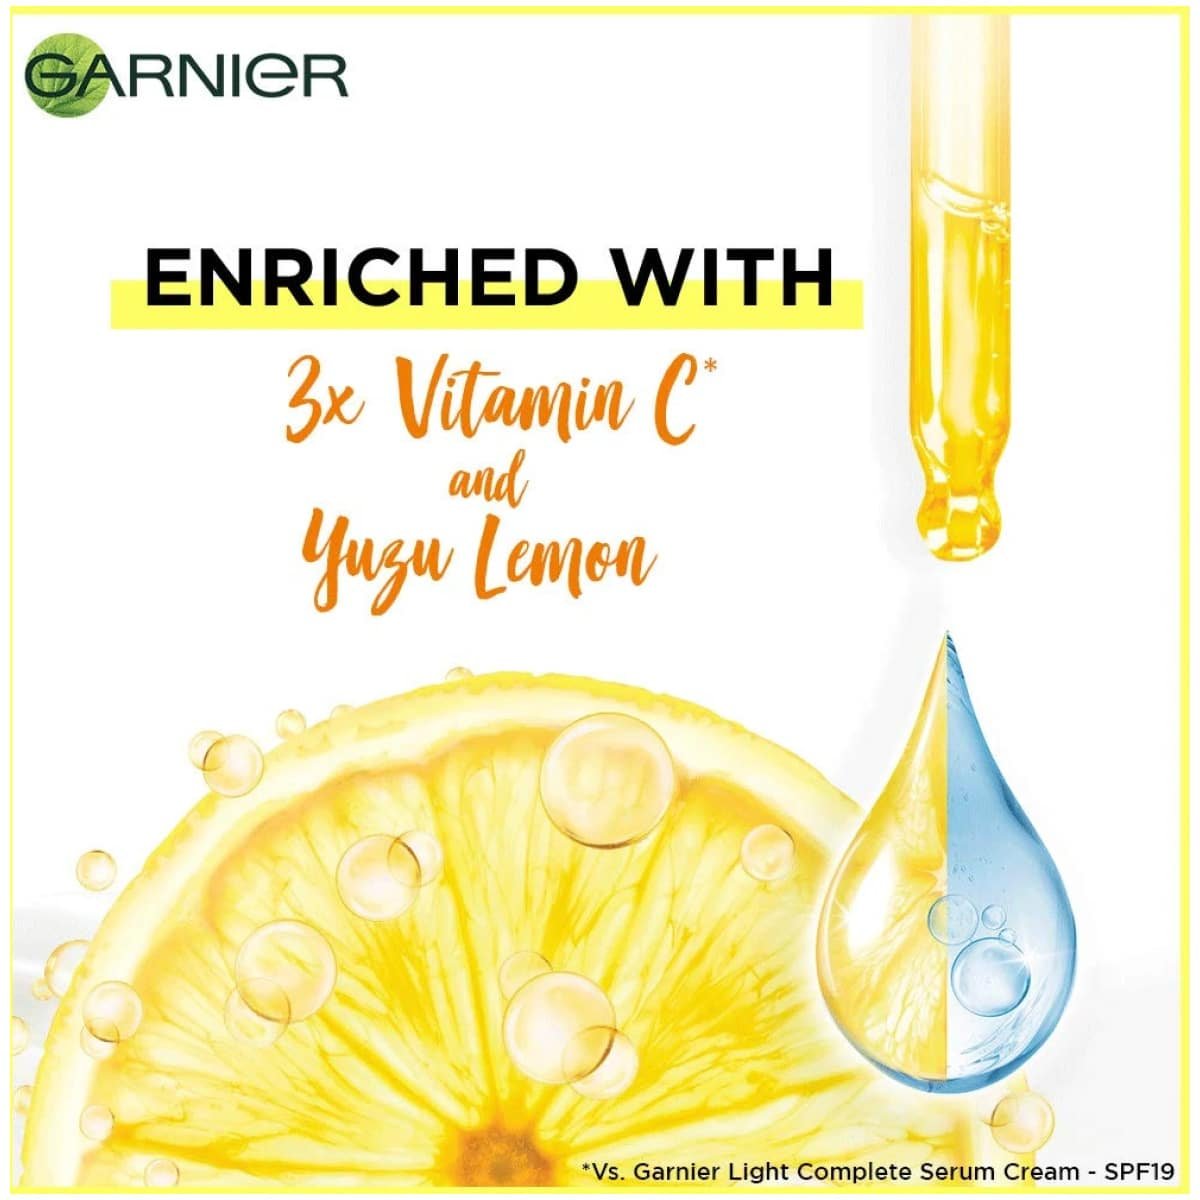 Garnier Skin Naturals Bright Complete Vitamin C Serum Cream Uv 23G